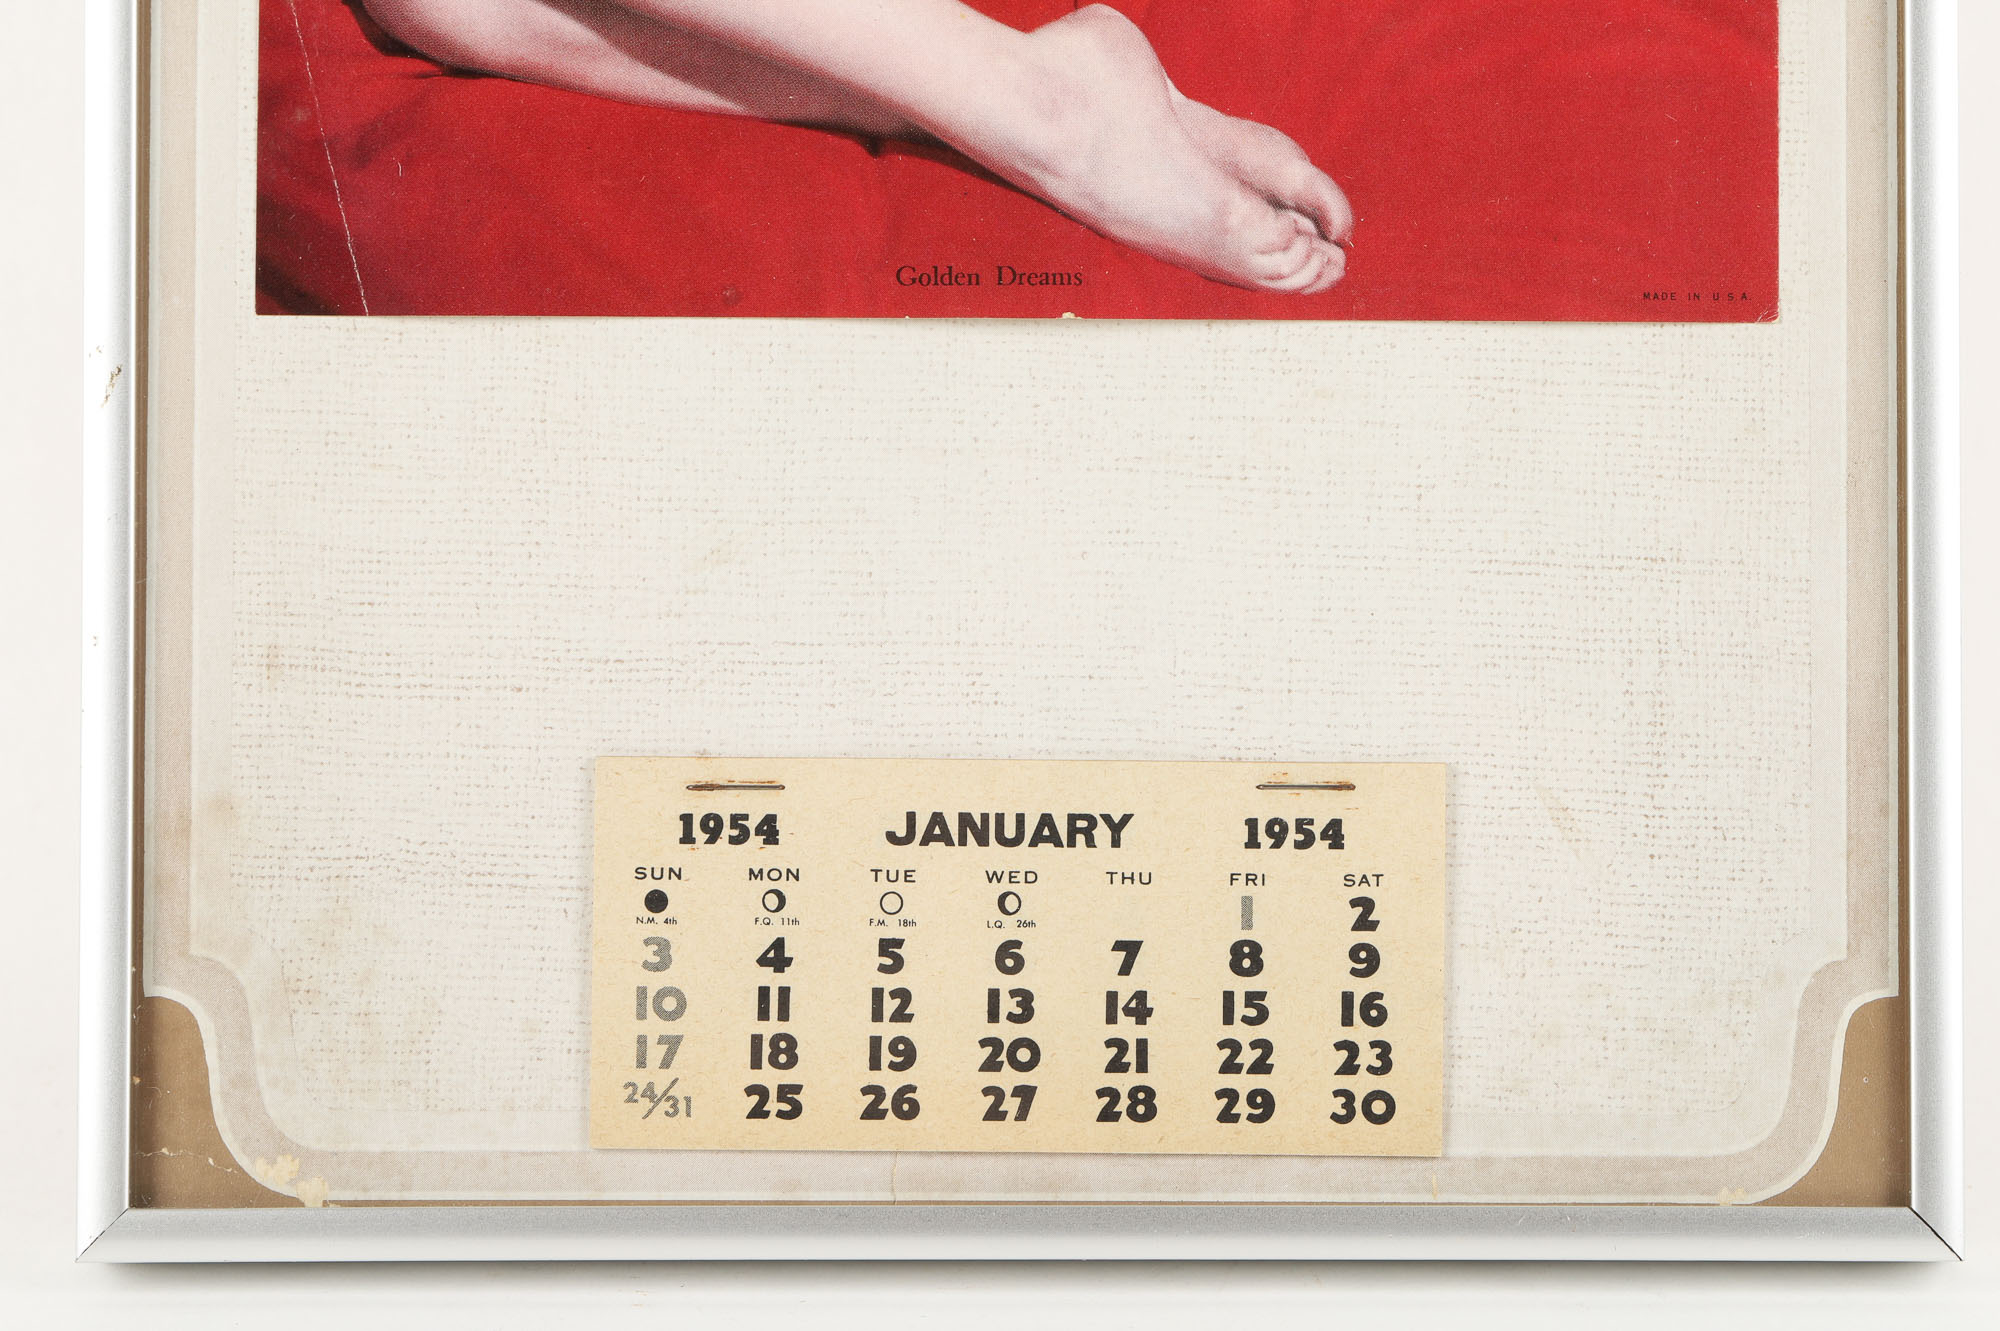 1954 Marilyn Monroe Golden Dreams Calendar Miller & Miller Auctions Ltd